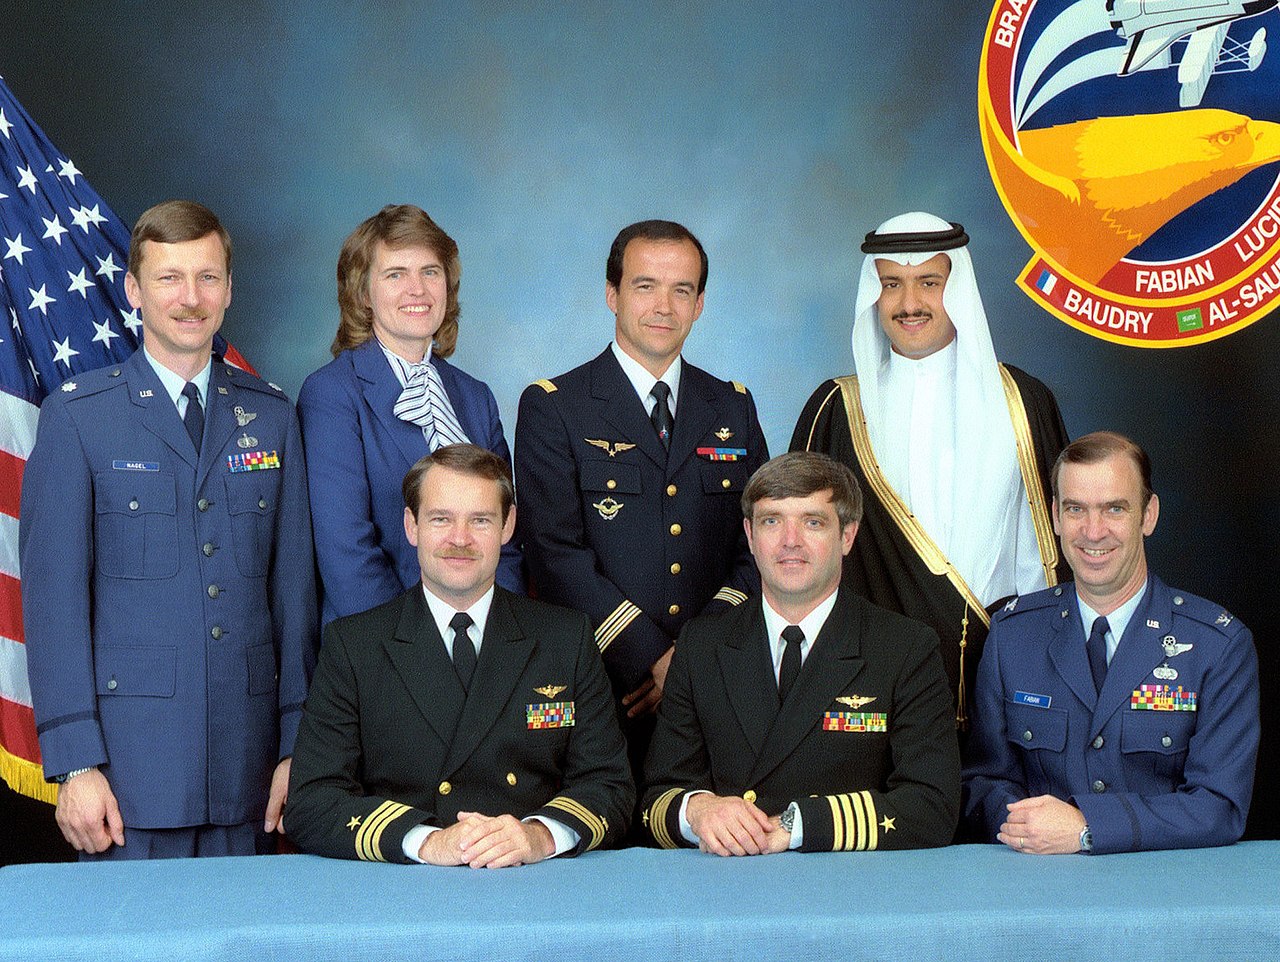 Seven crew members pose for crew portrait